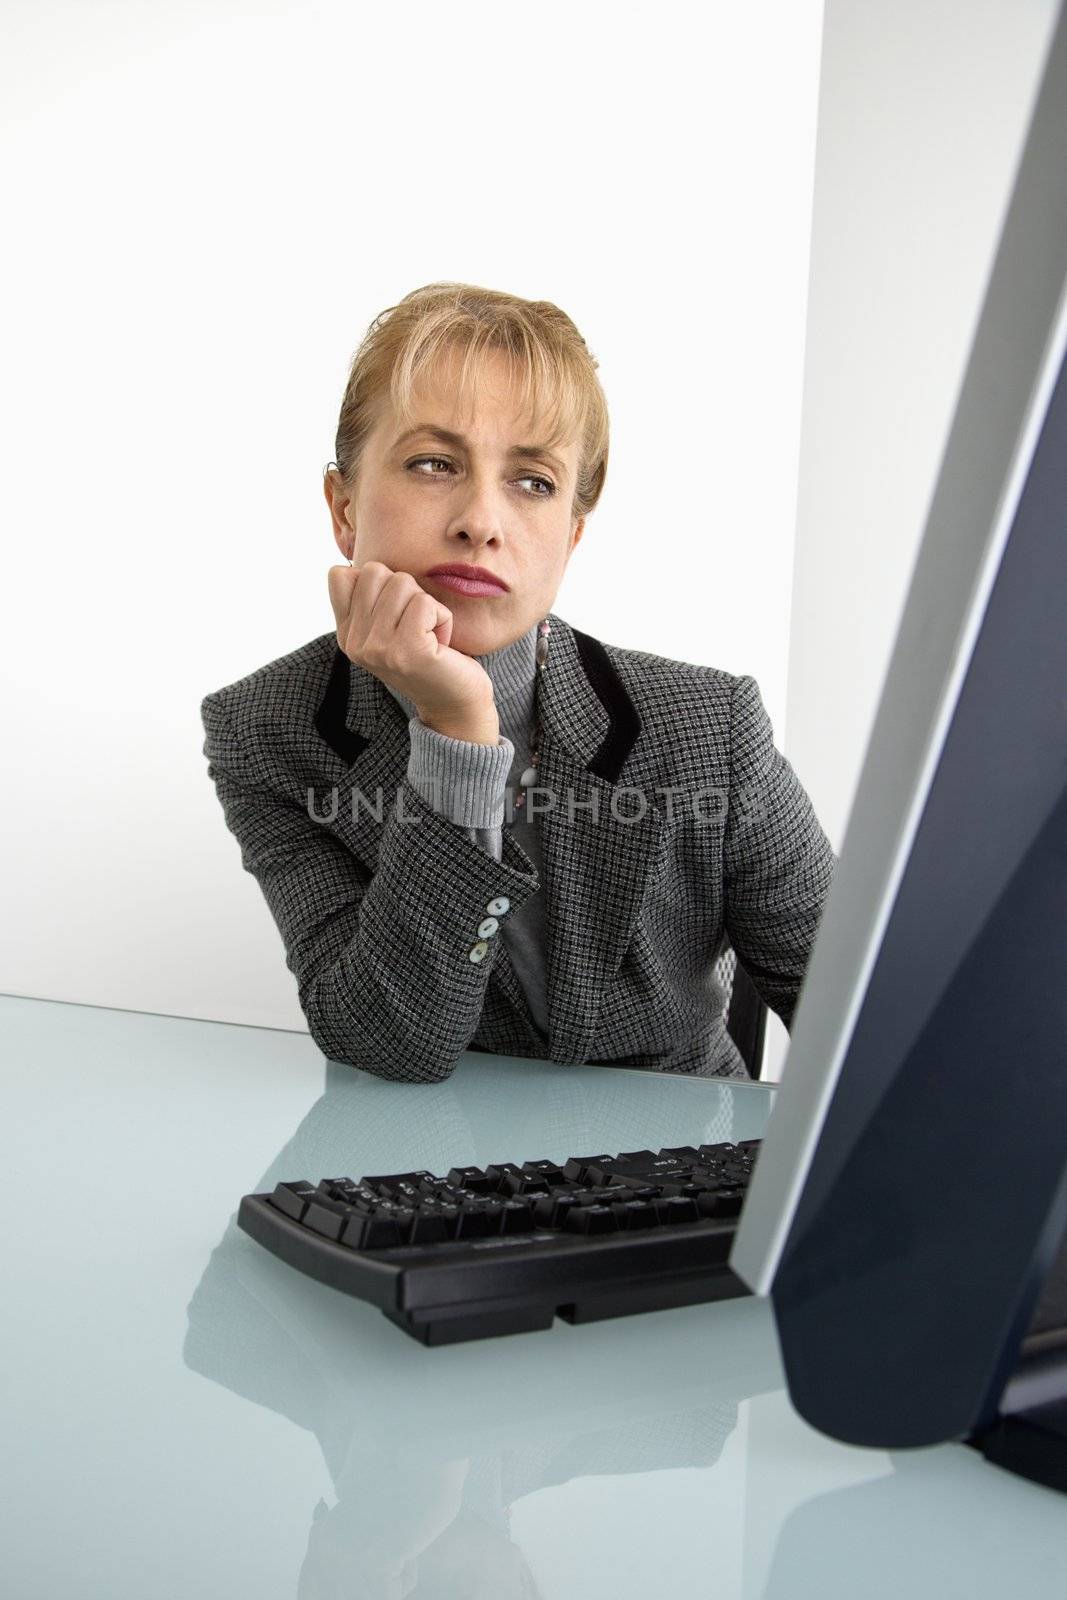 Caucasian woman looking bored at computer.